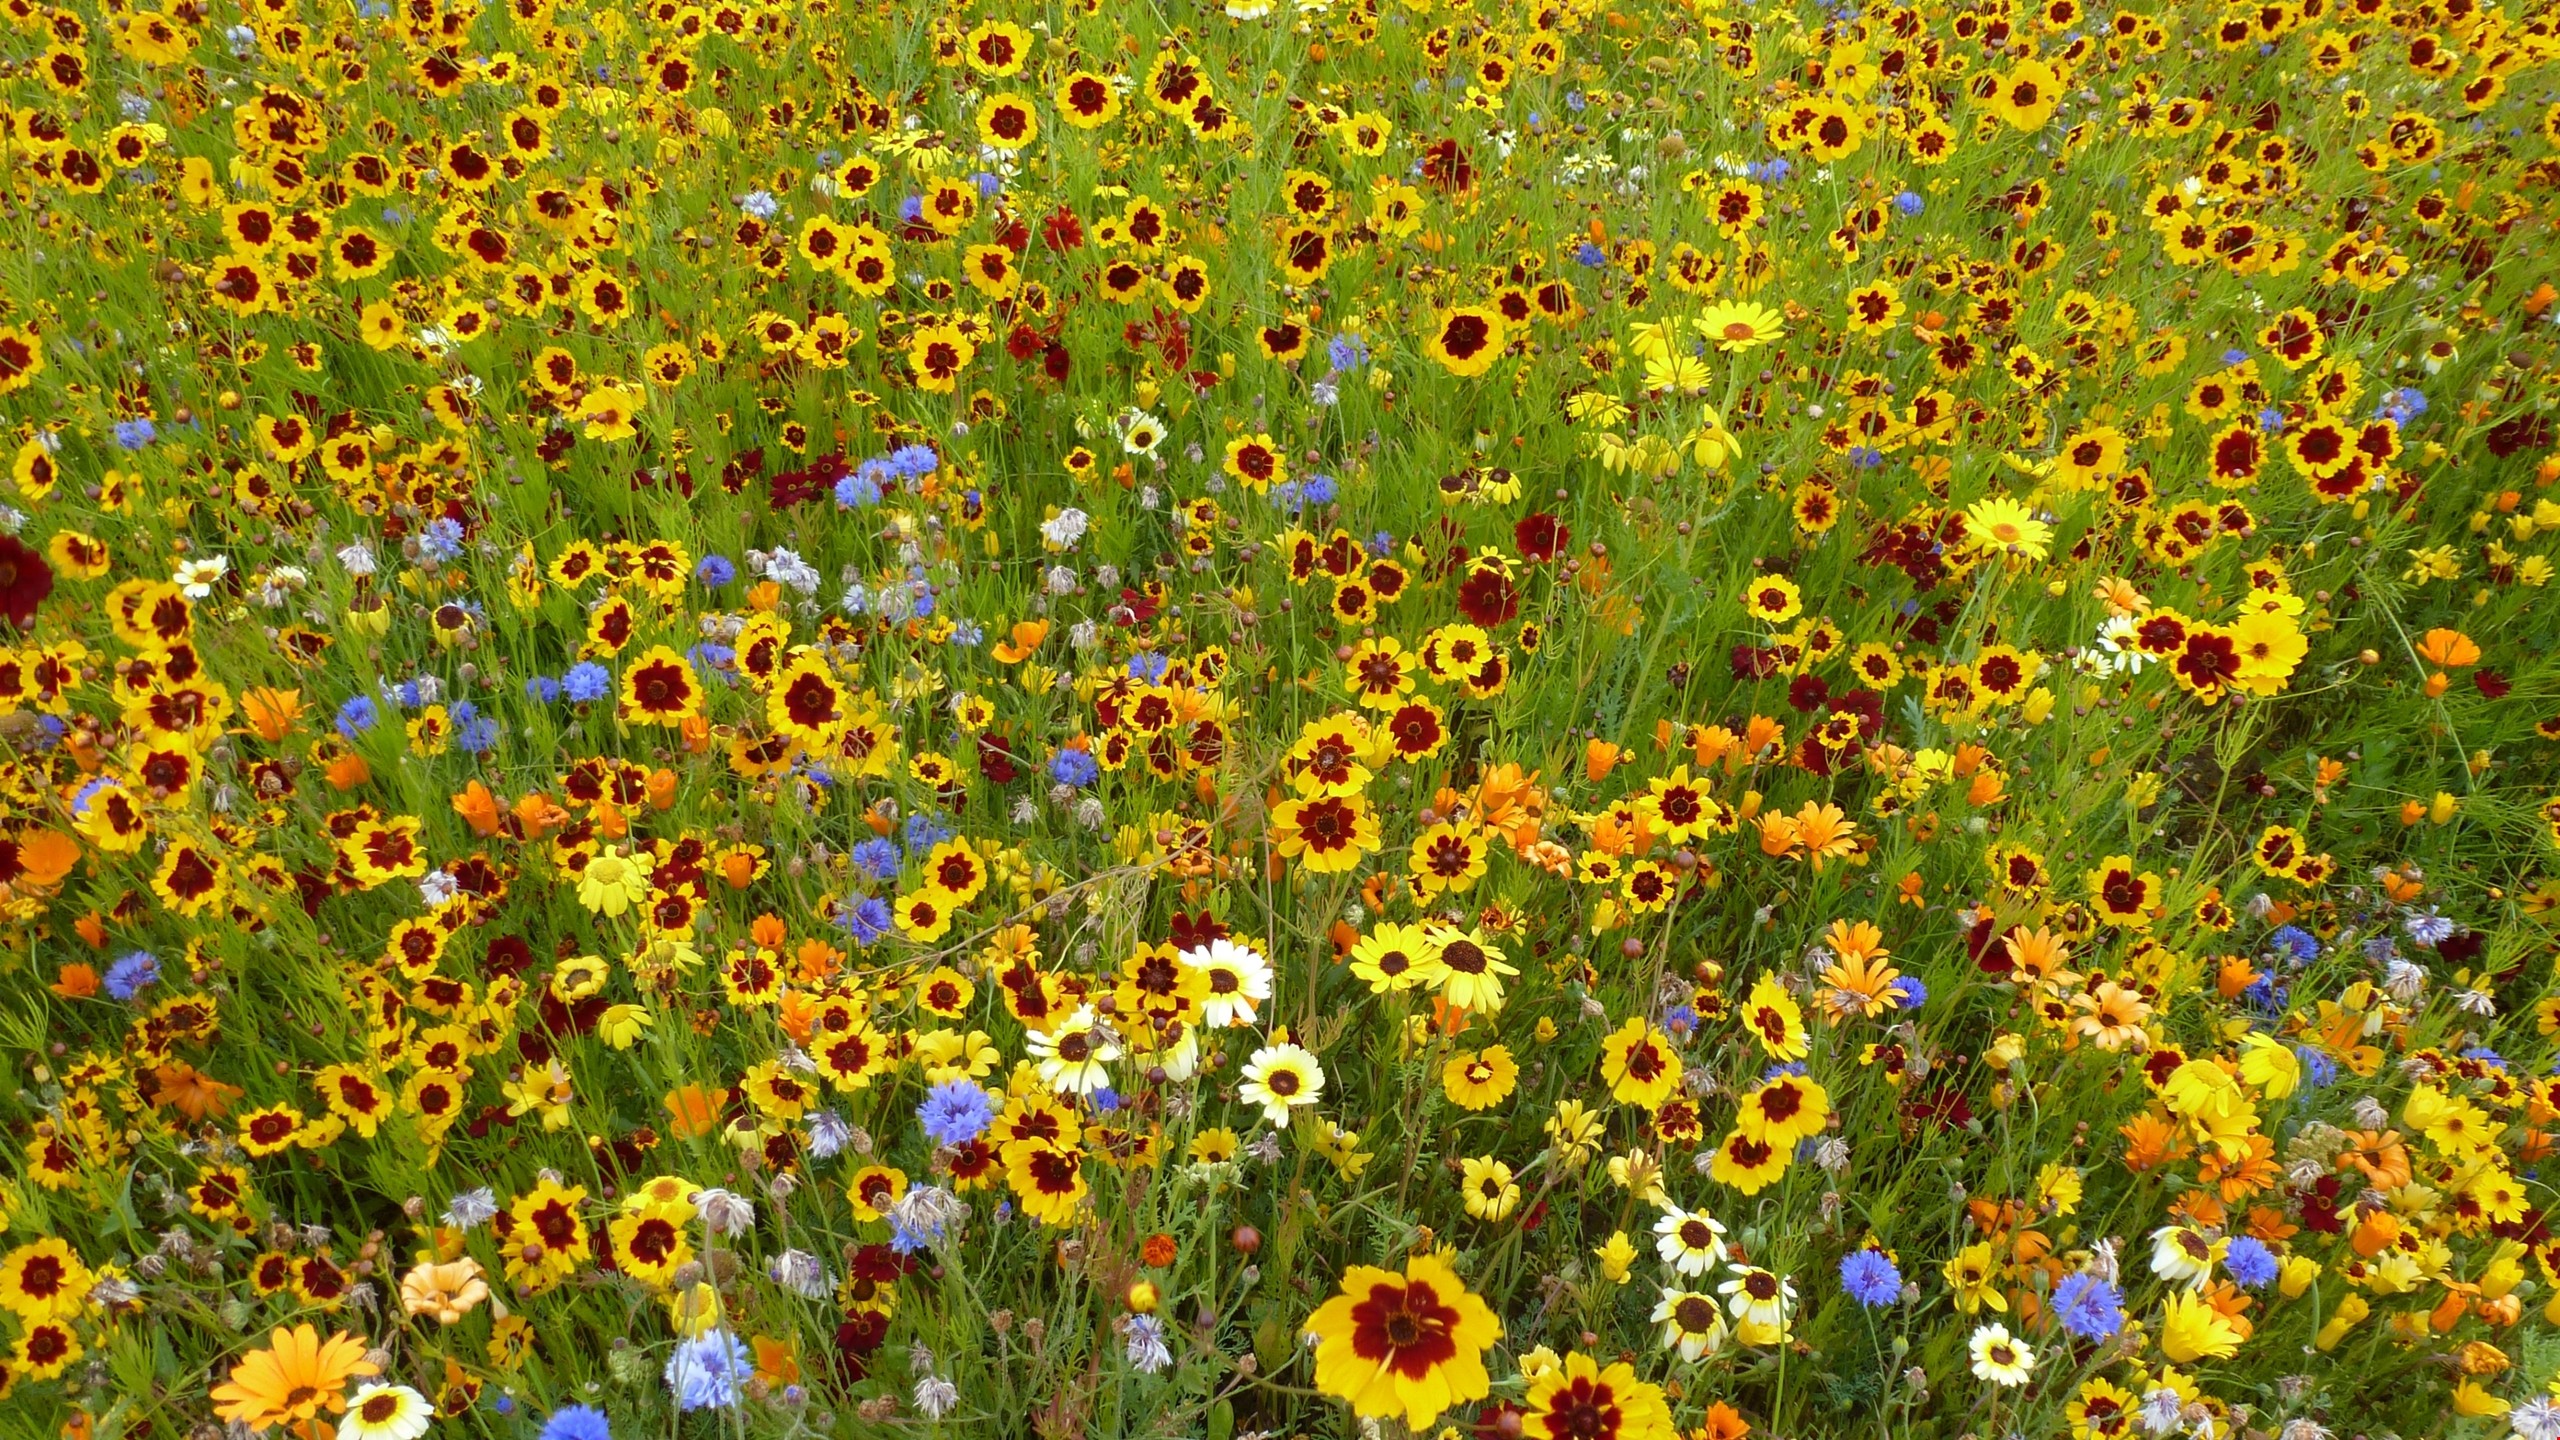 Wildflower Desktop Wallpaper Images  Free Download on Freepik